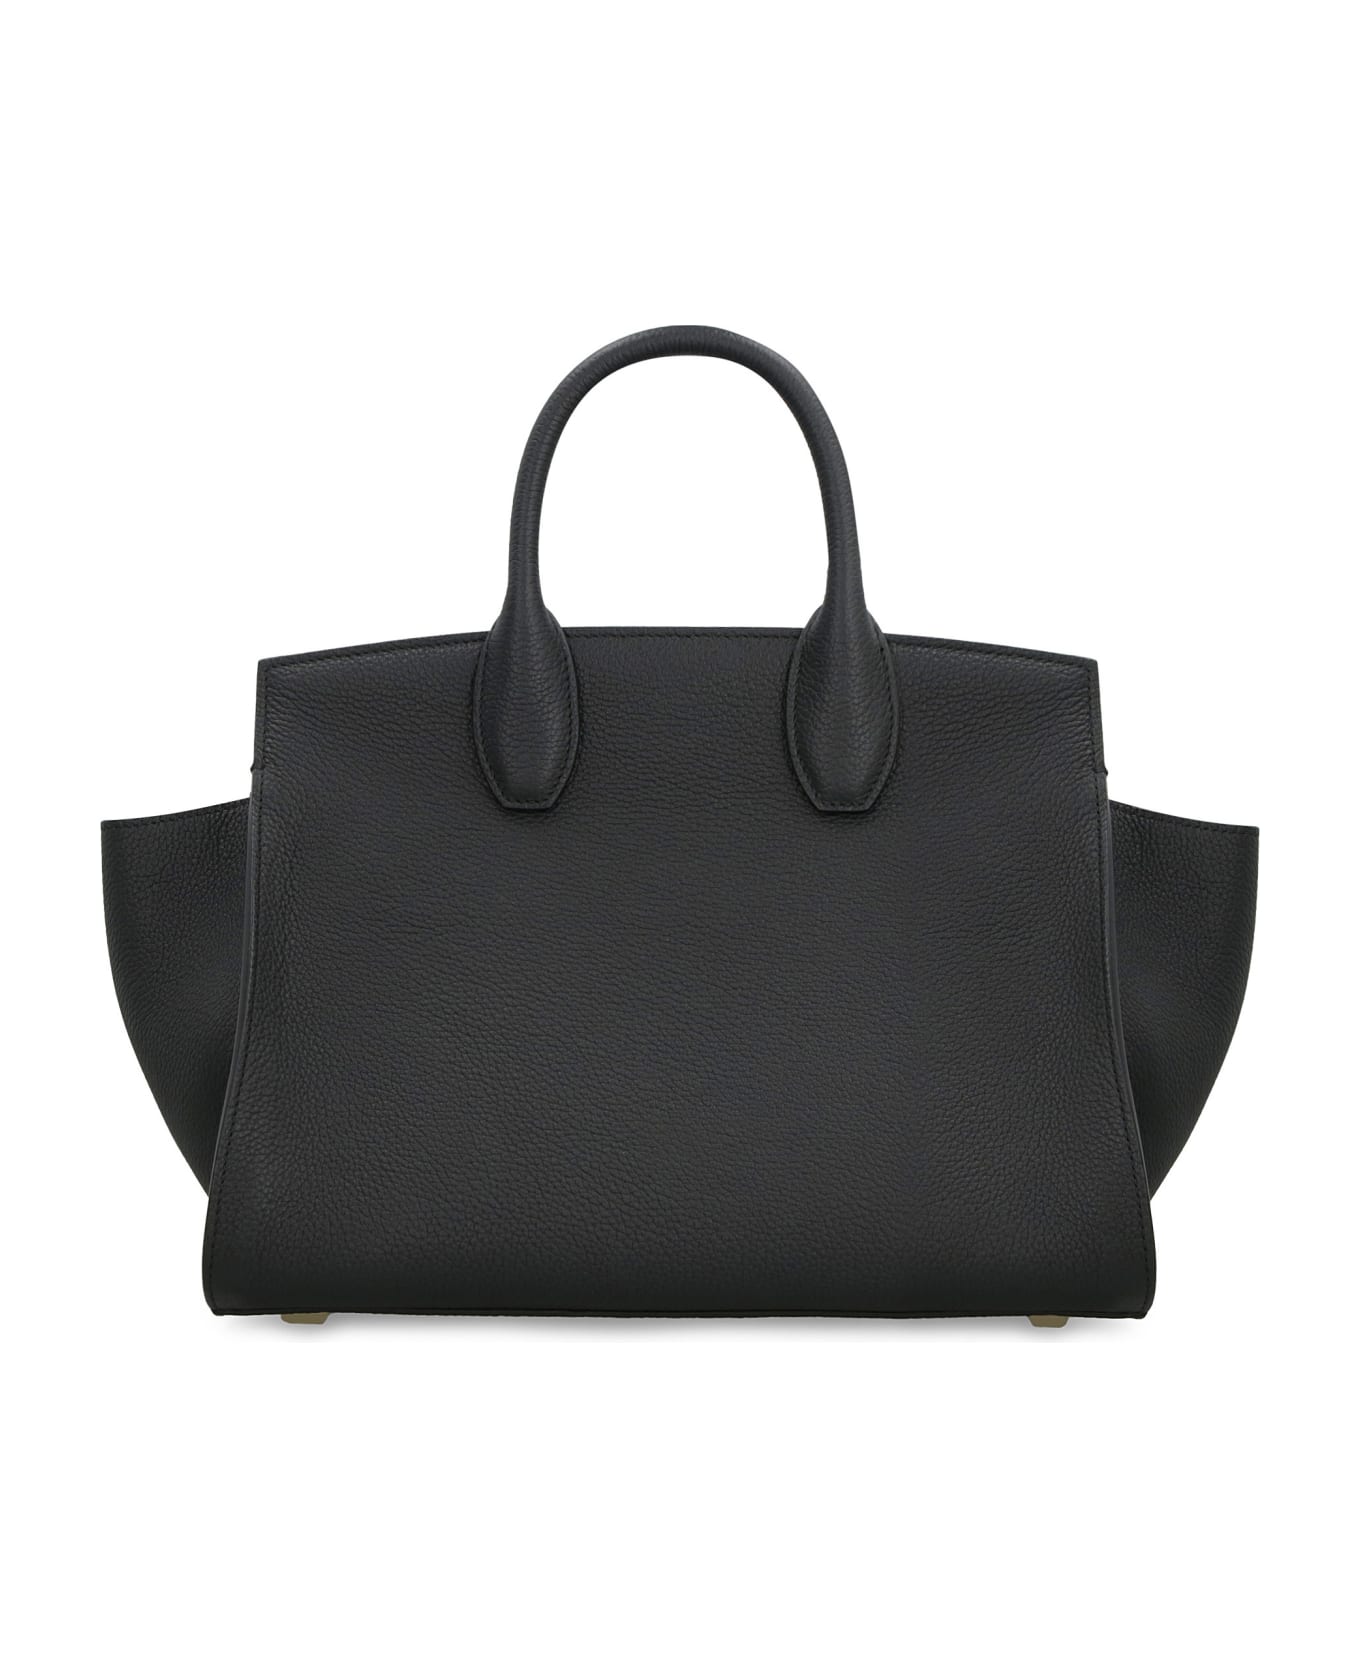 Ferragamo Studio Soft Leather Handbag - Nero